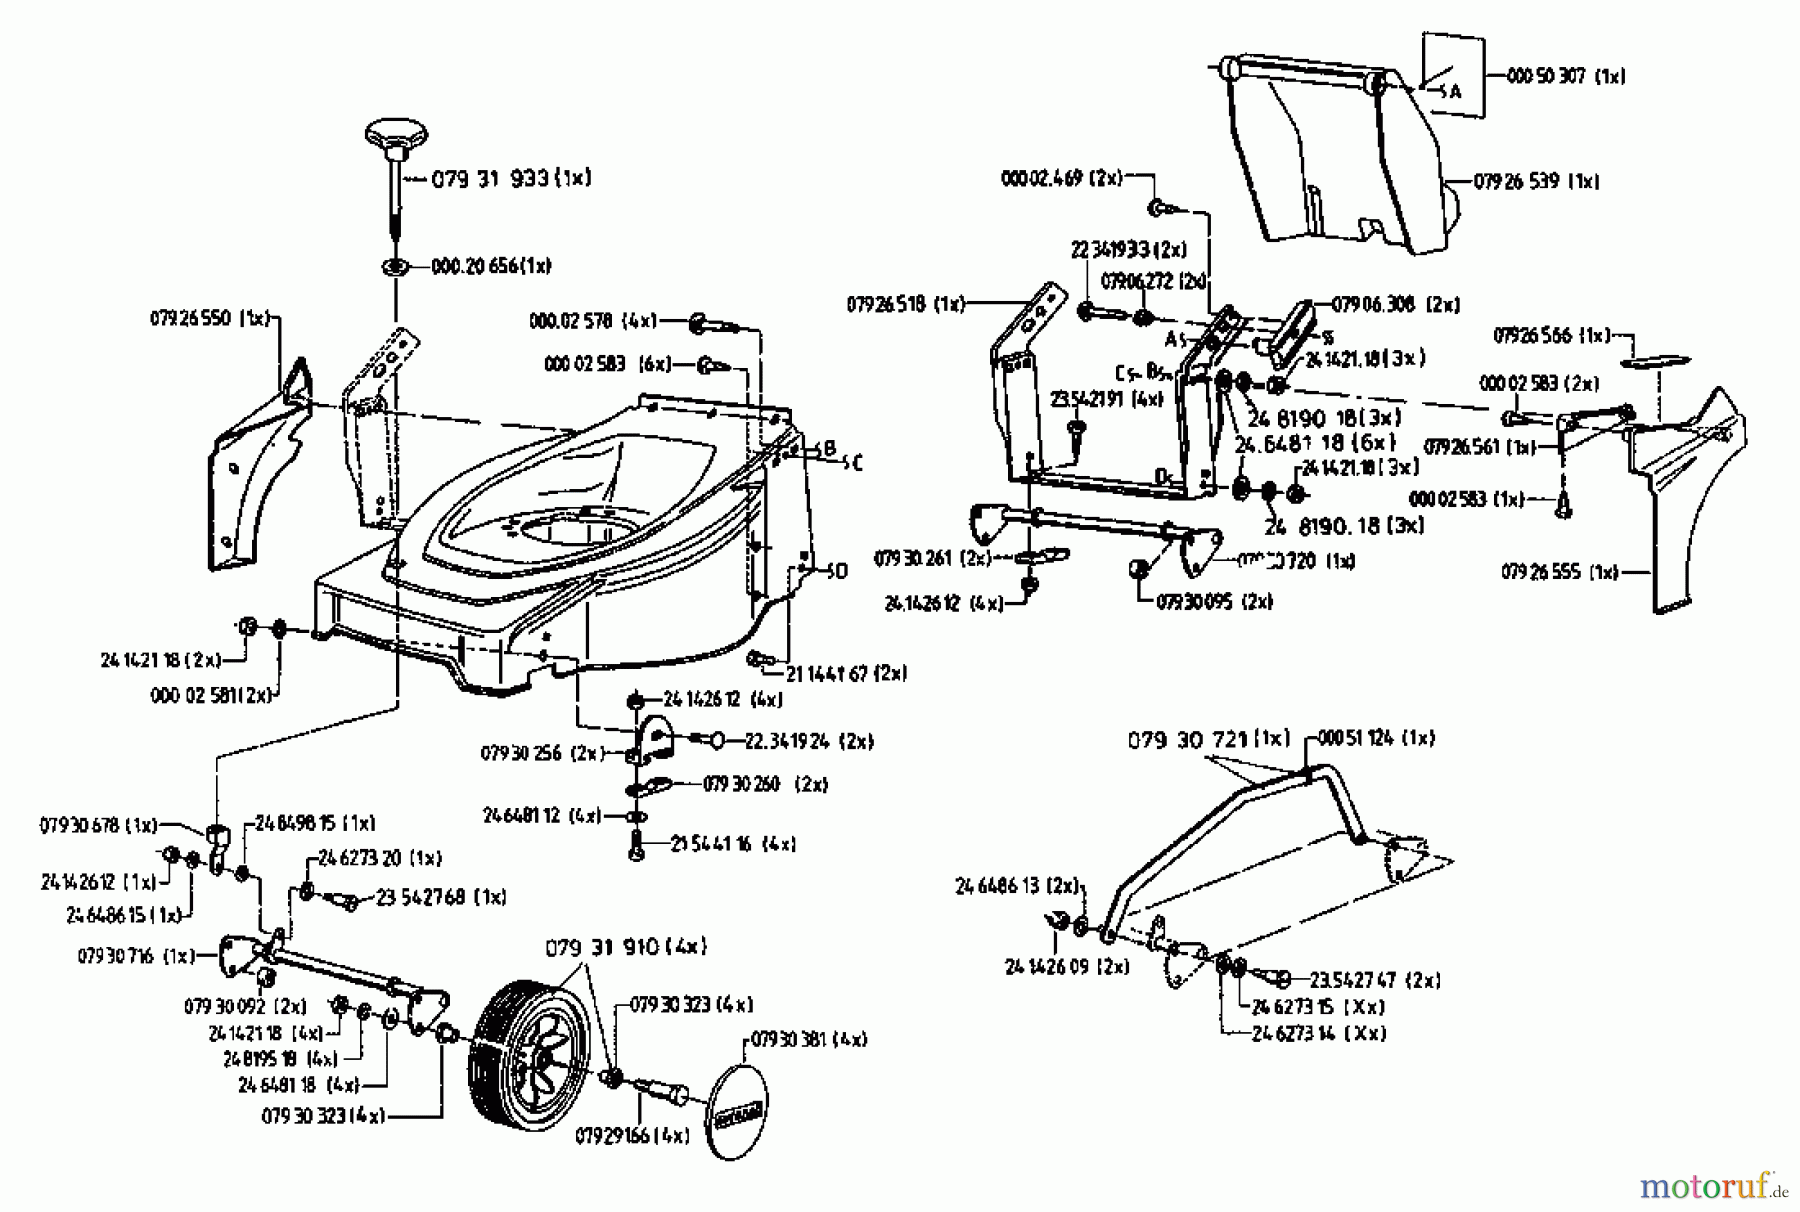  Gutbrod Petrol mower HB 42 L 04028.02  (1996) Basic machine